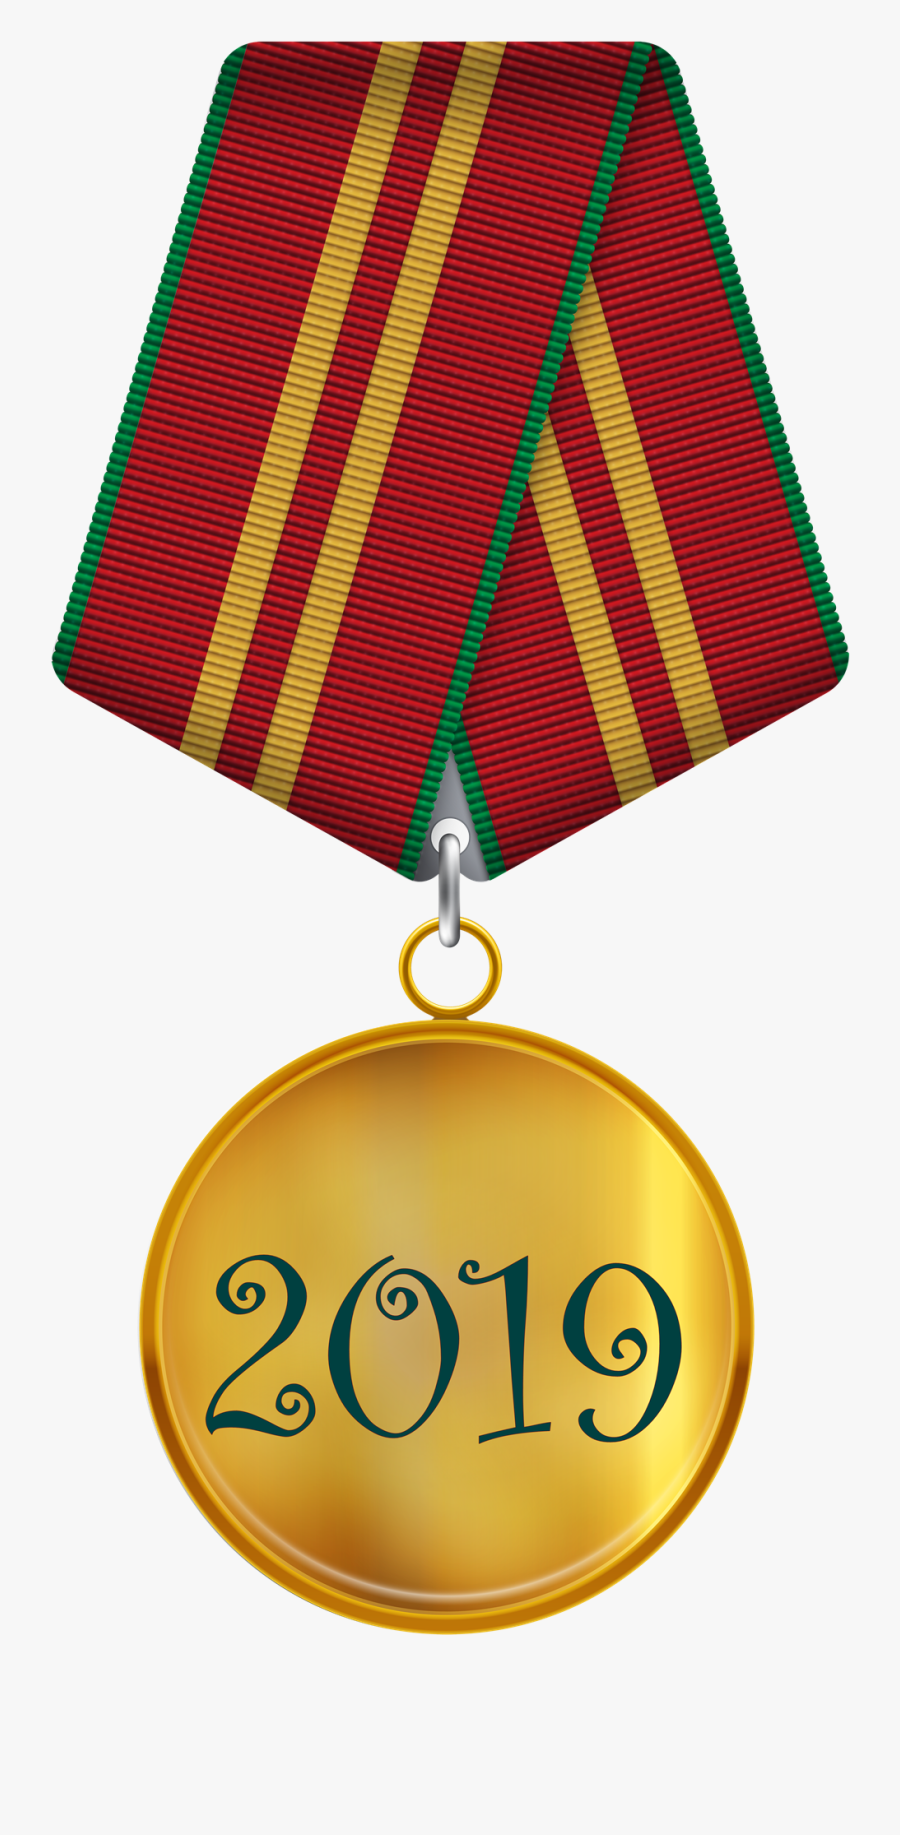 Gold Medal Png Clipart - Medal Clipart Png, Transparent Clipart